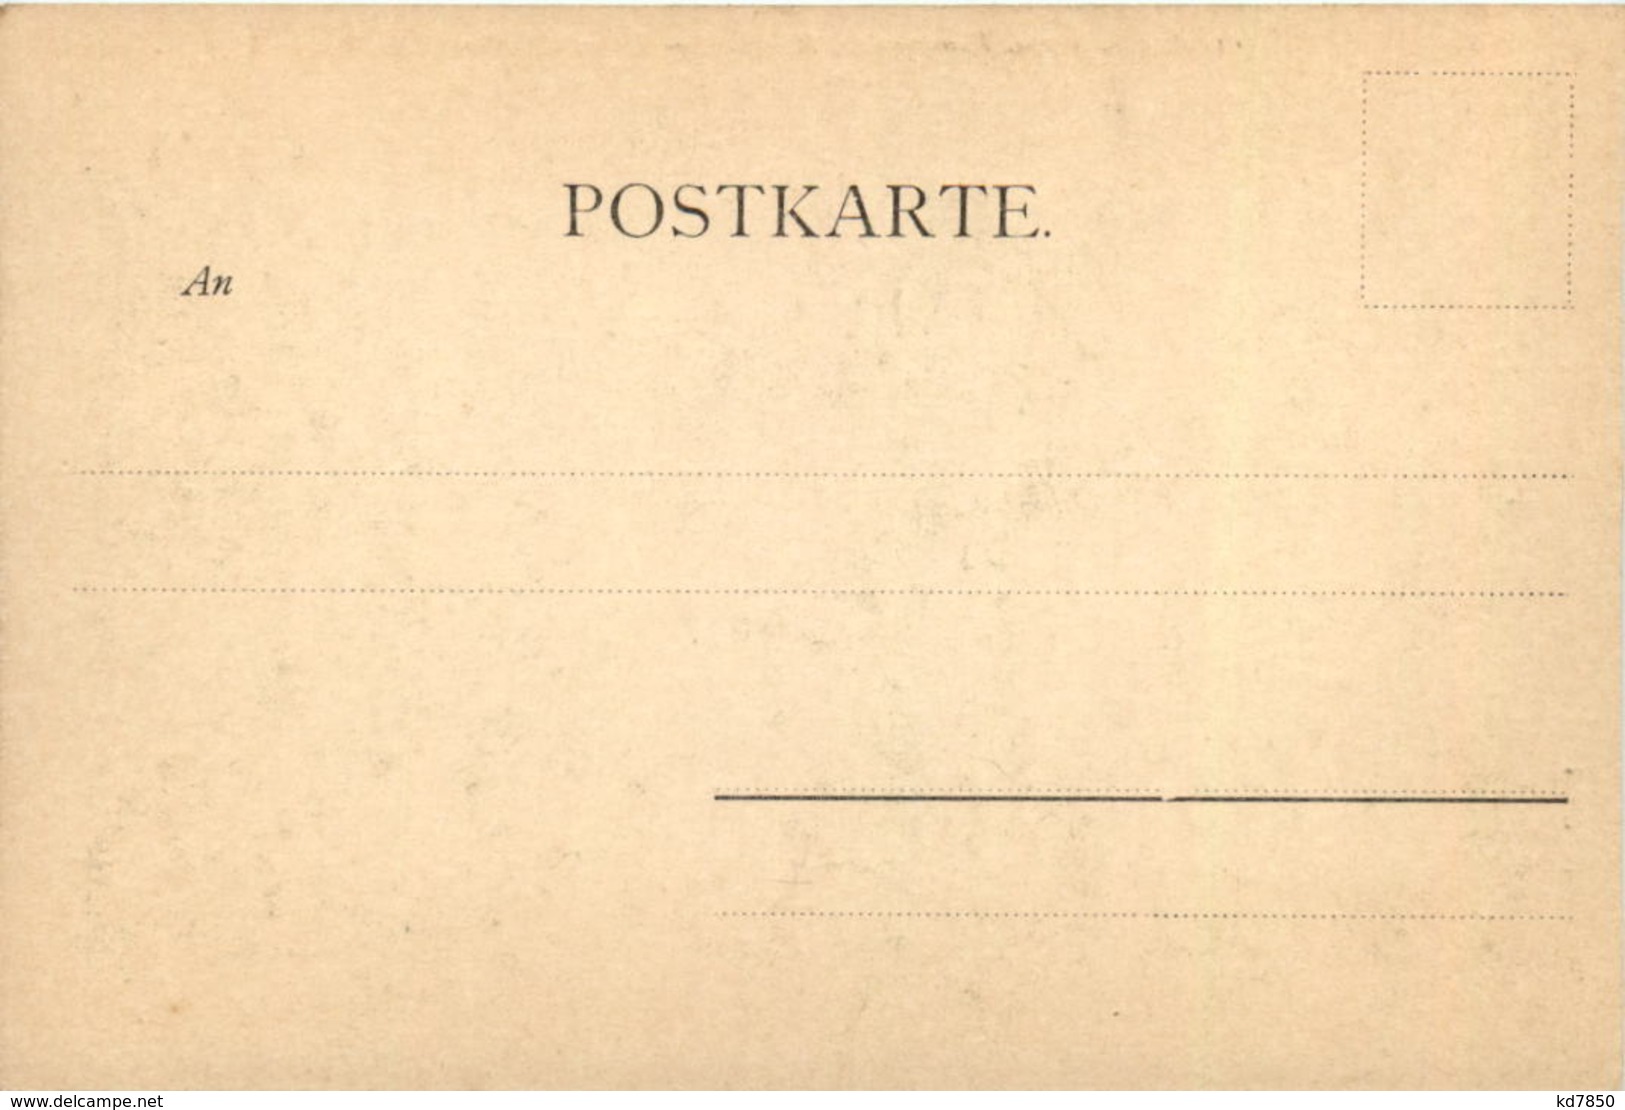 F. Doubek - Postkartenregen - Ackermann Kunstverlag - Doubek, F.